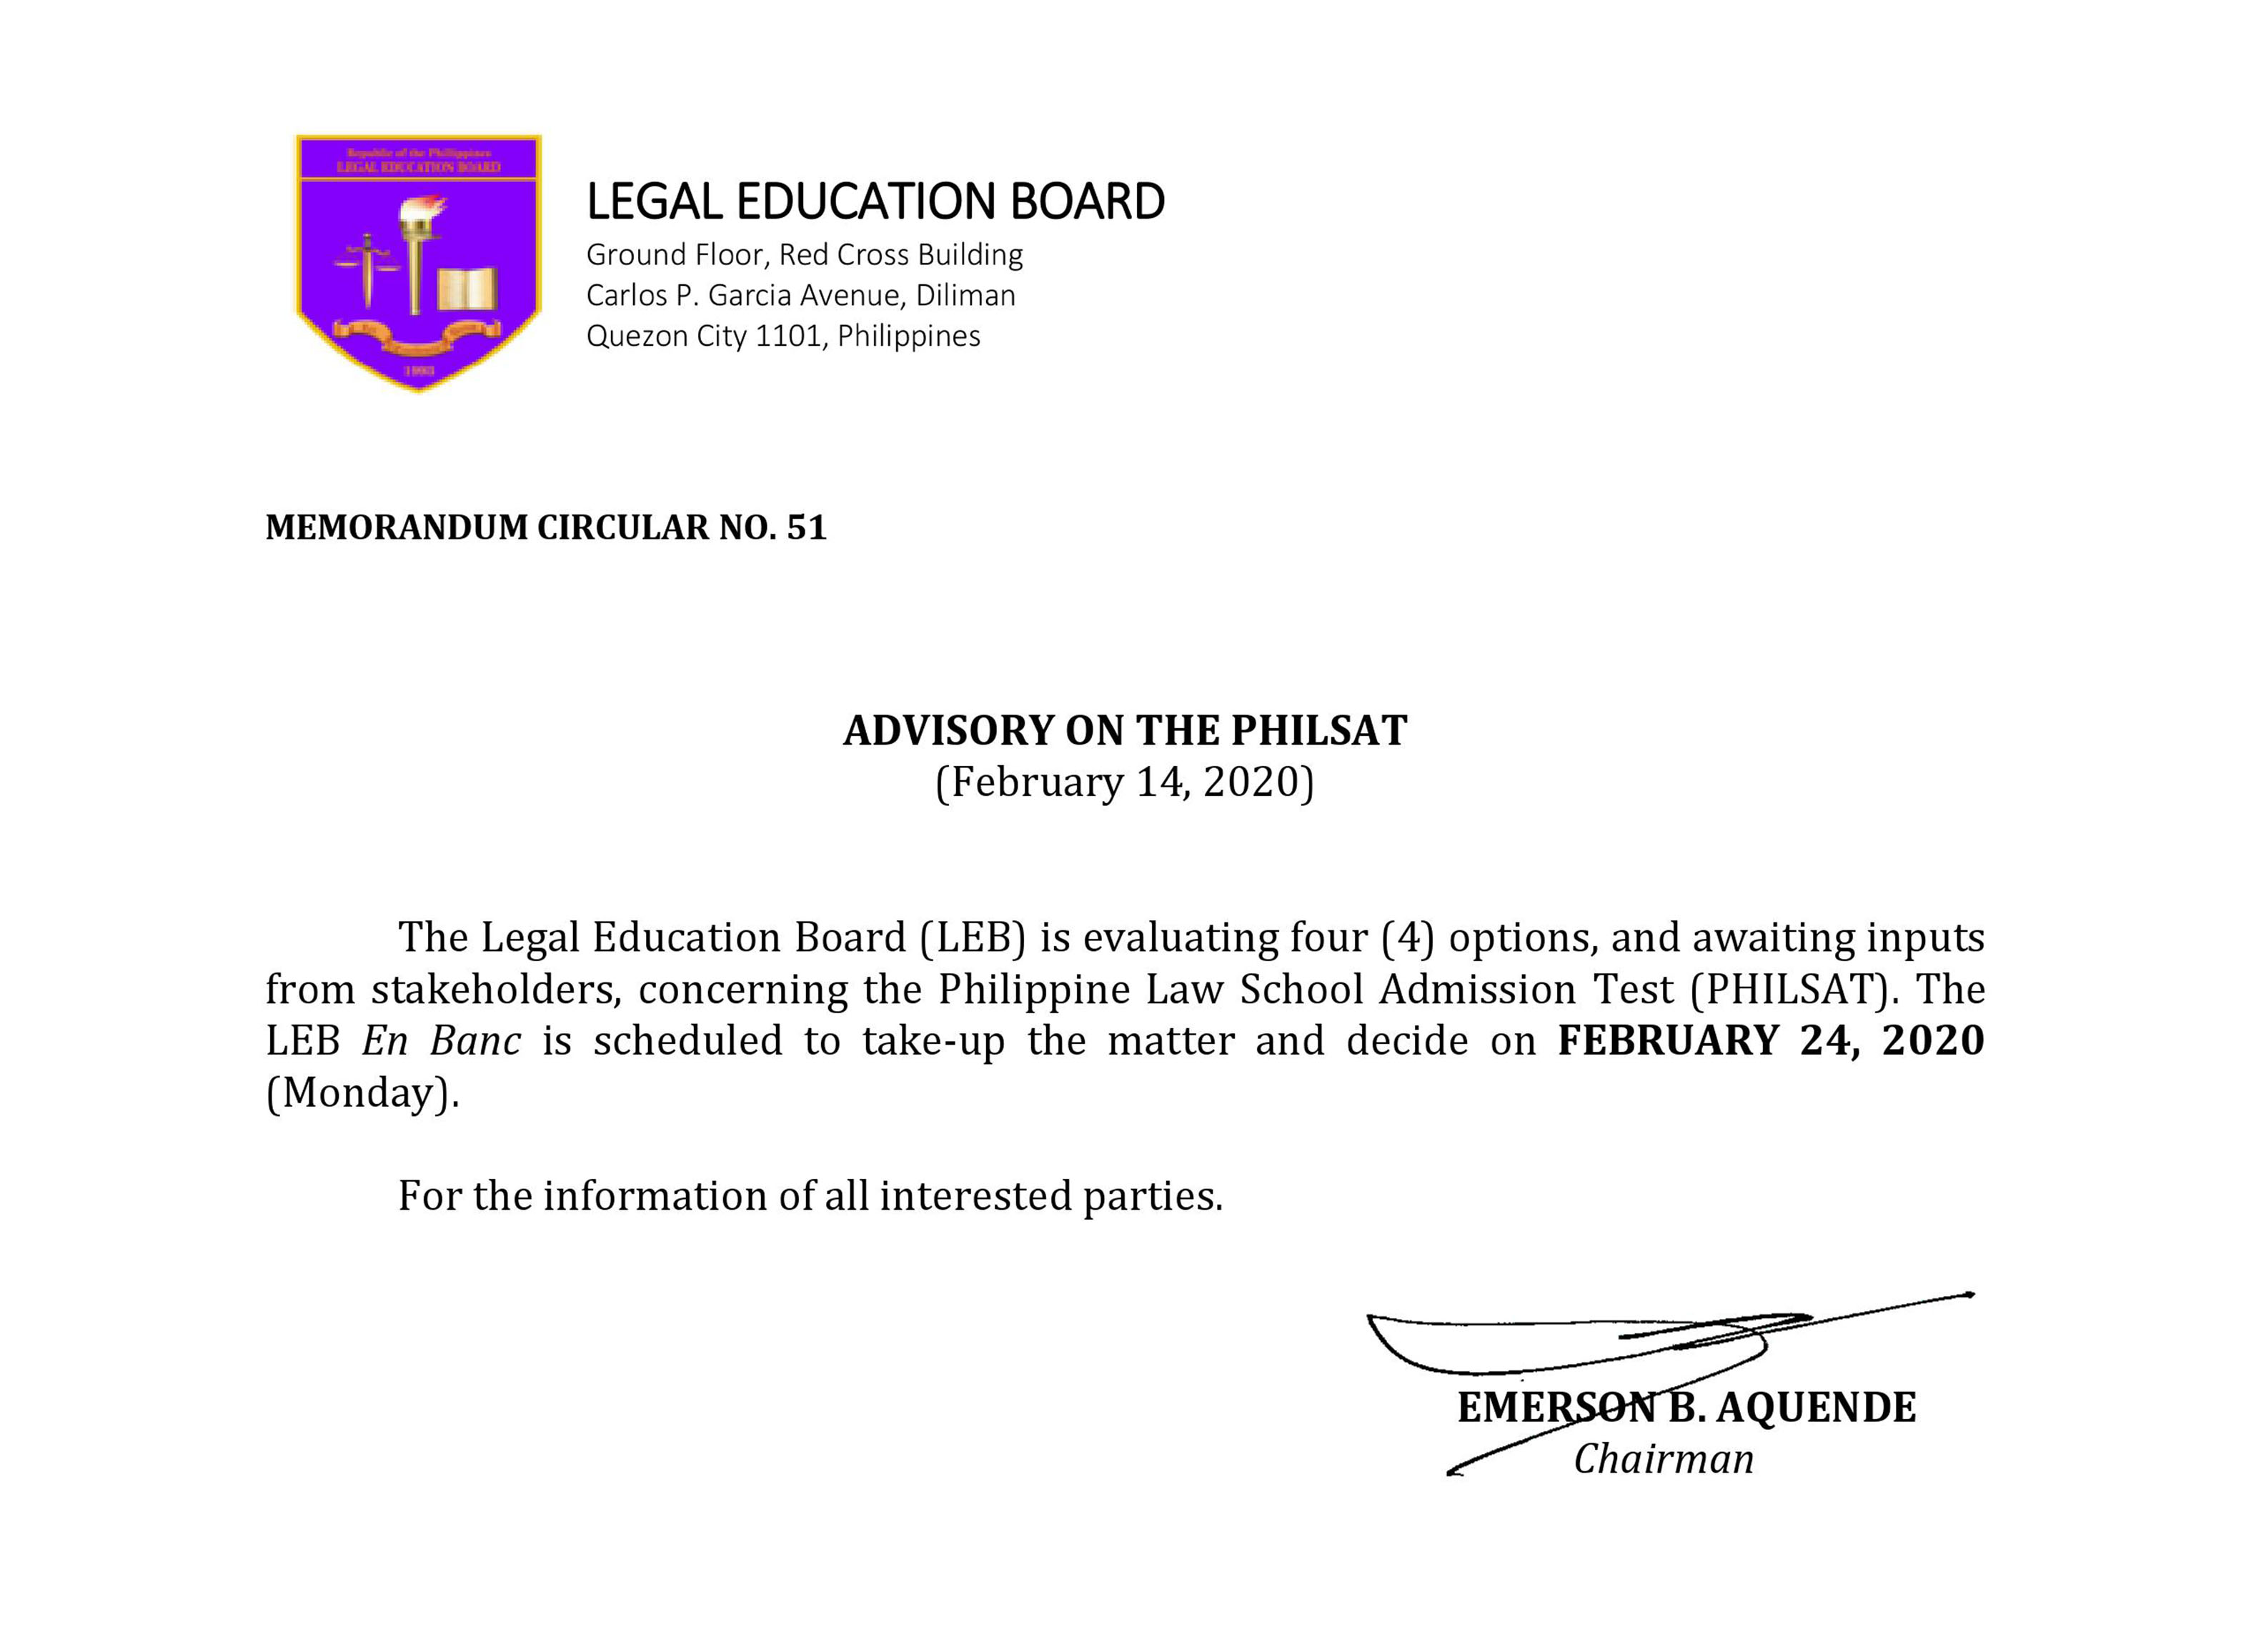 Legal Education Board’s Advisory Re: PhiLSAT Memorandum Circular No. 51